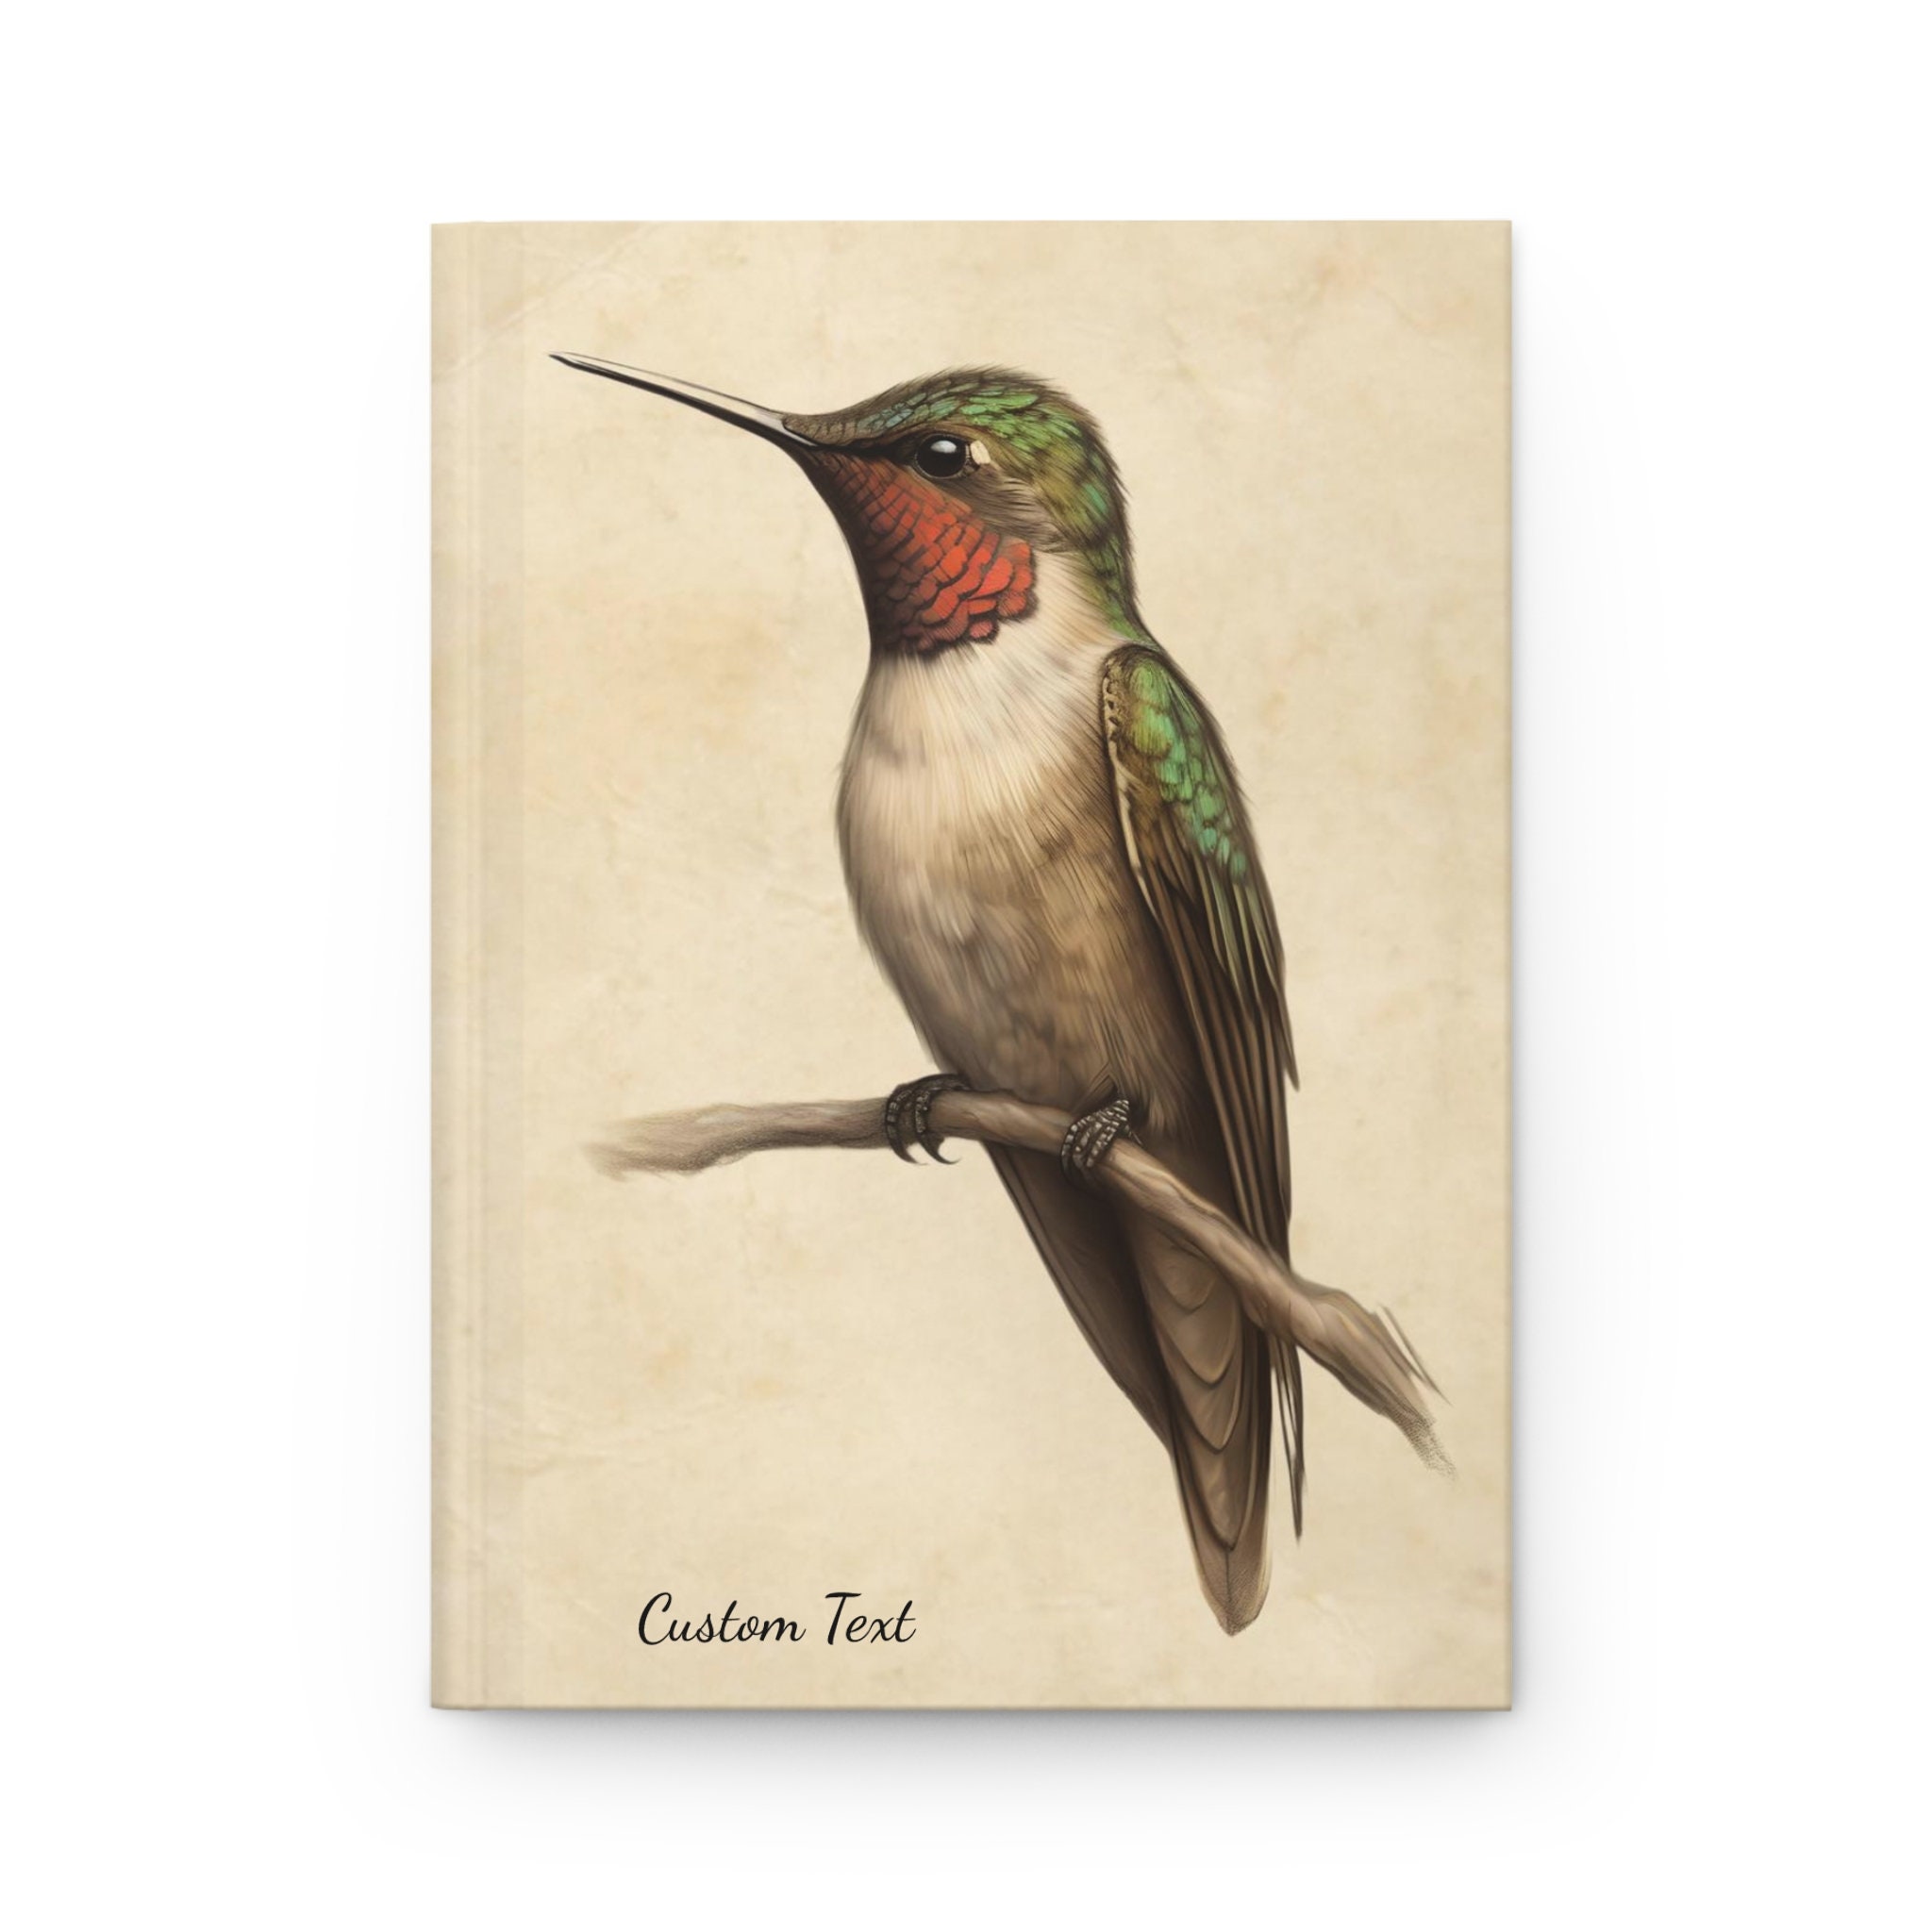 Hummingbird Journal, Hardcover Diary, Spiral Notebook, Original